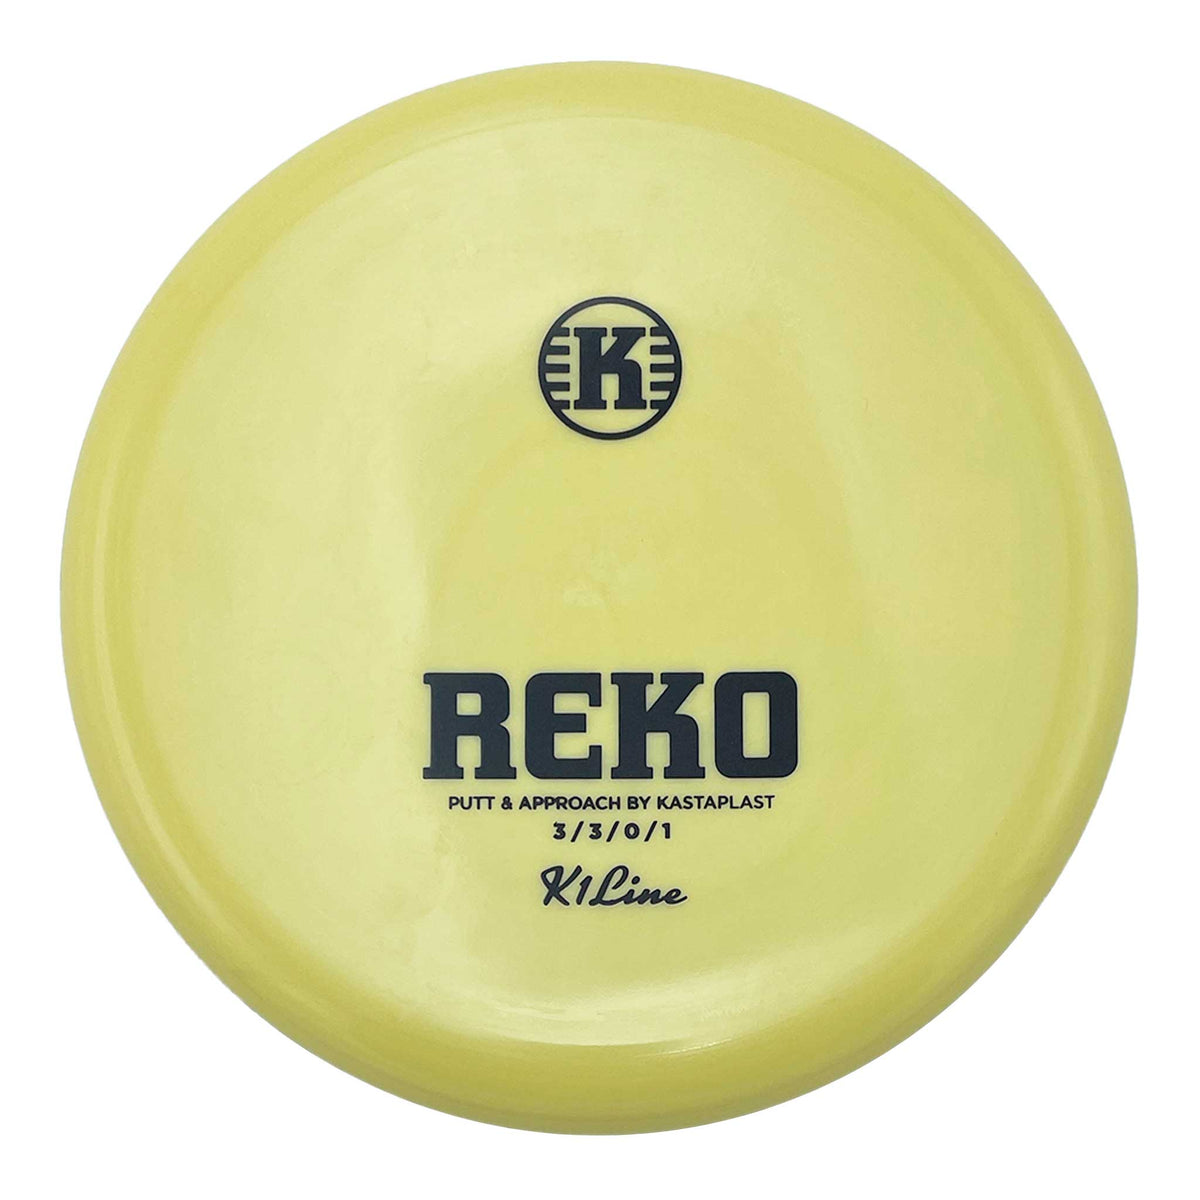 Kastaplast K1 Reko putter and approach - Yellow / Black